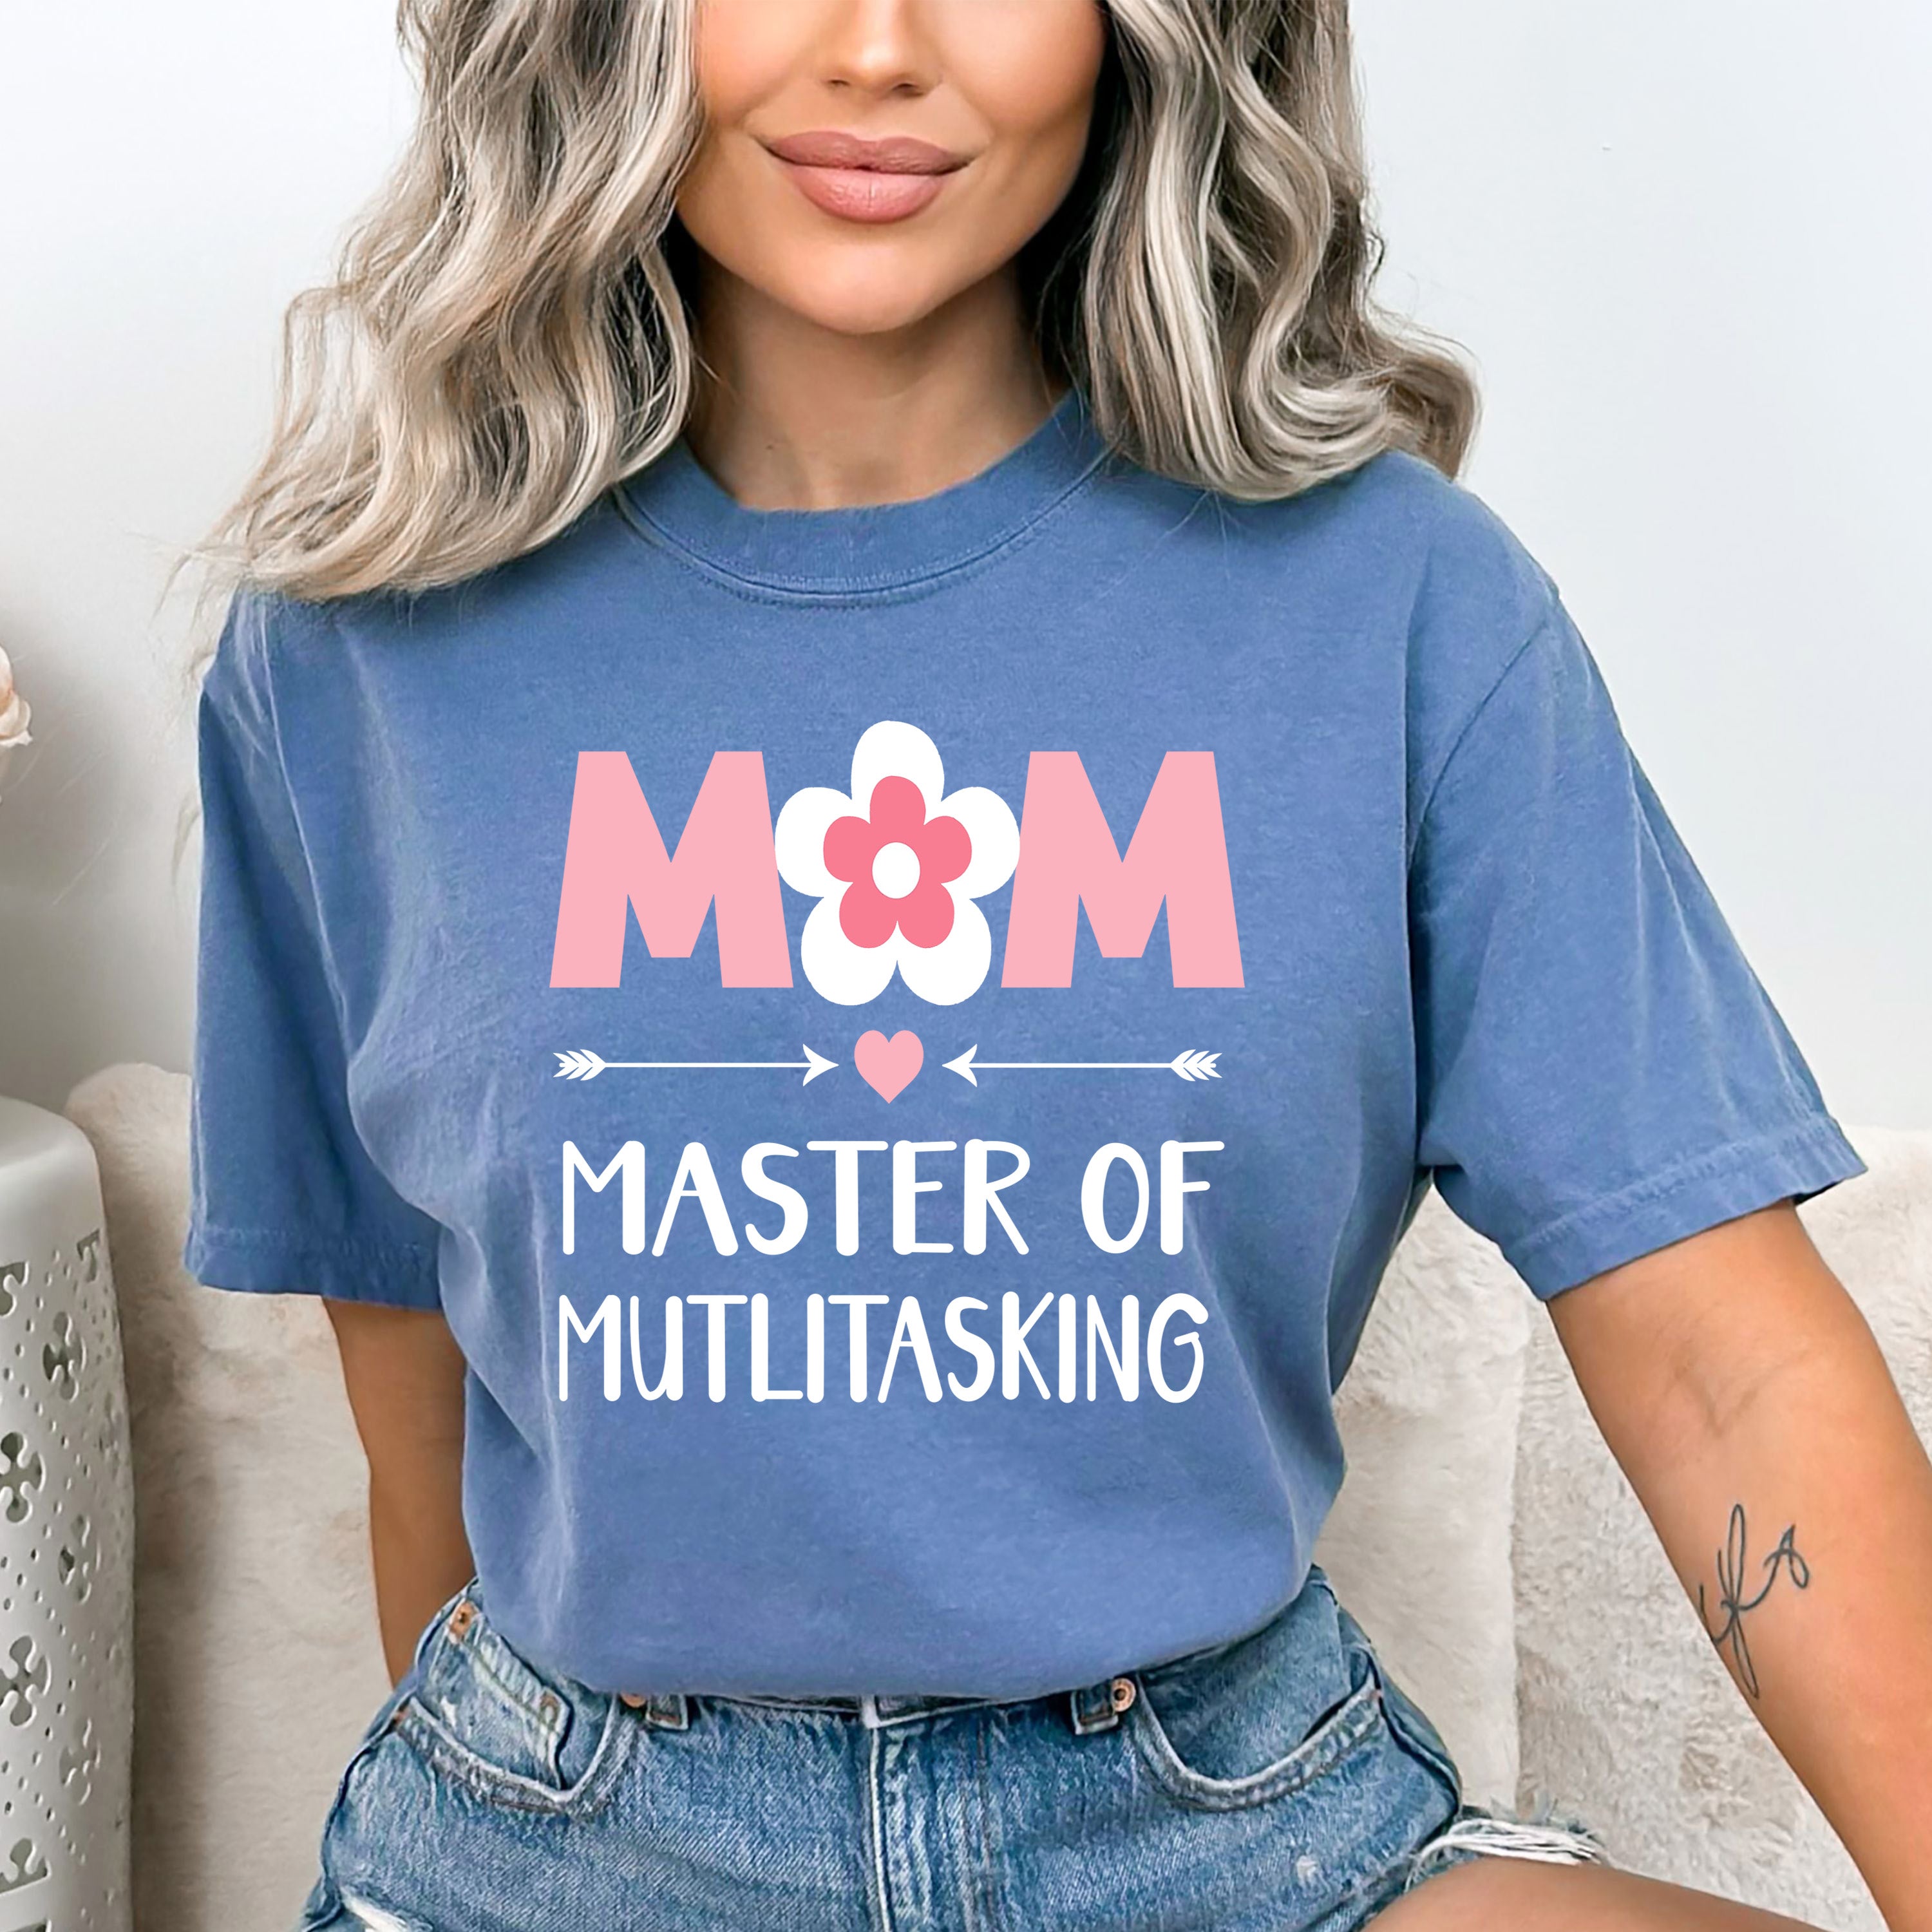 Mom Master of Multitasking - Bella canvas